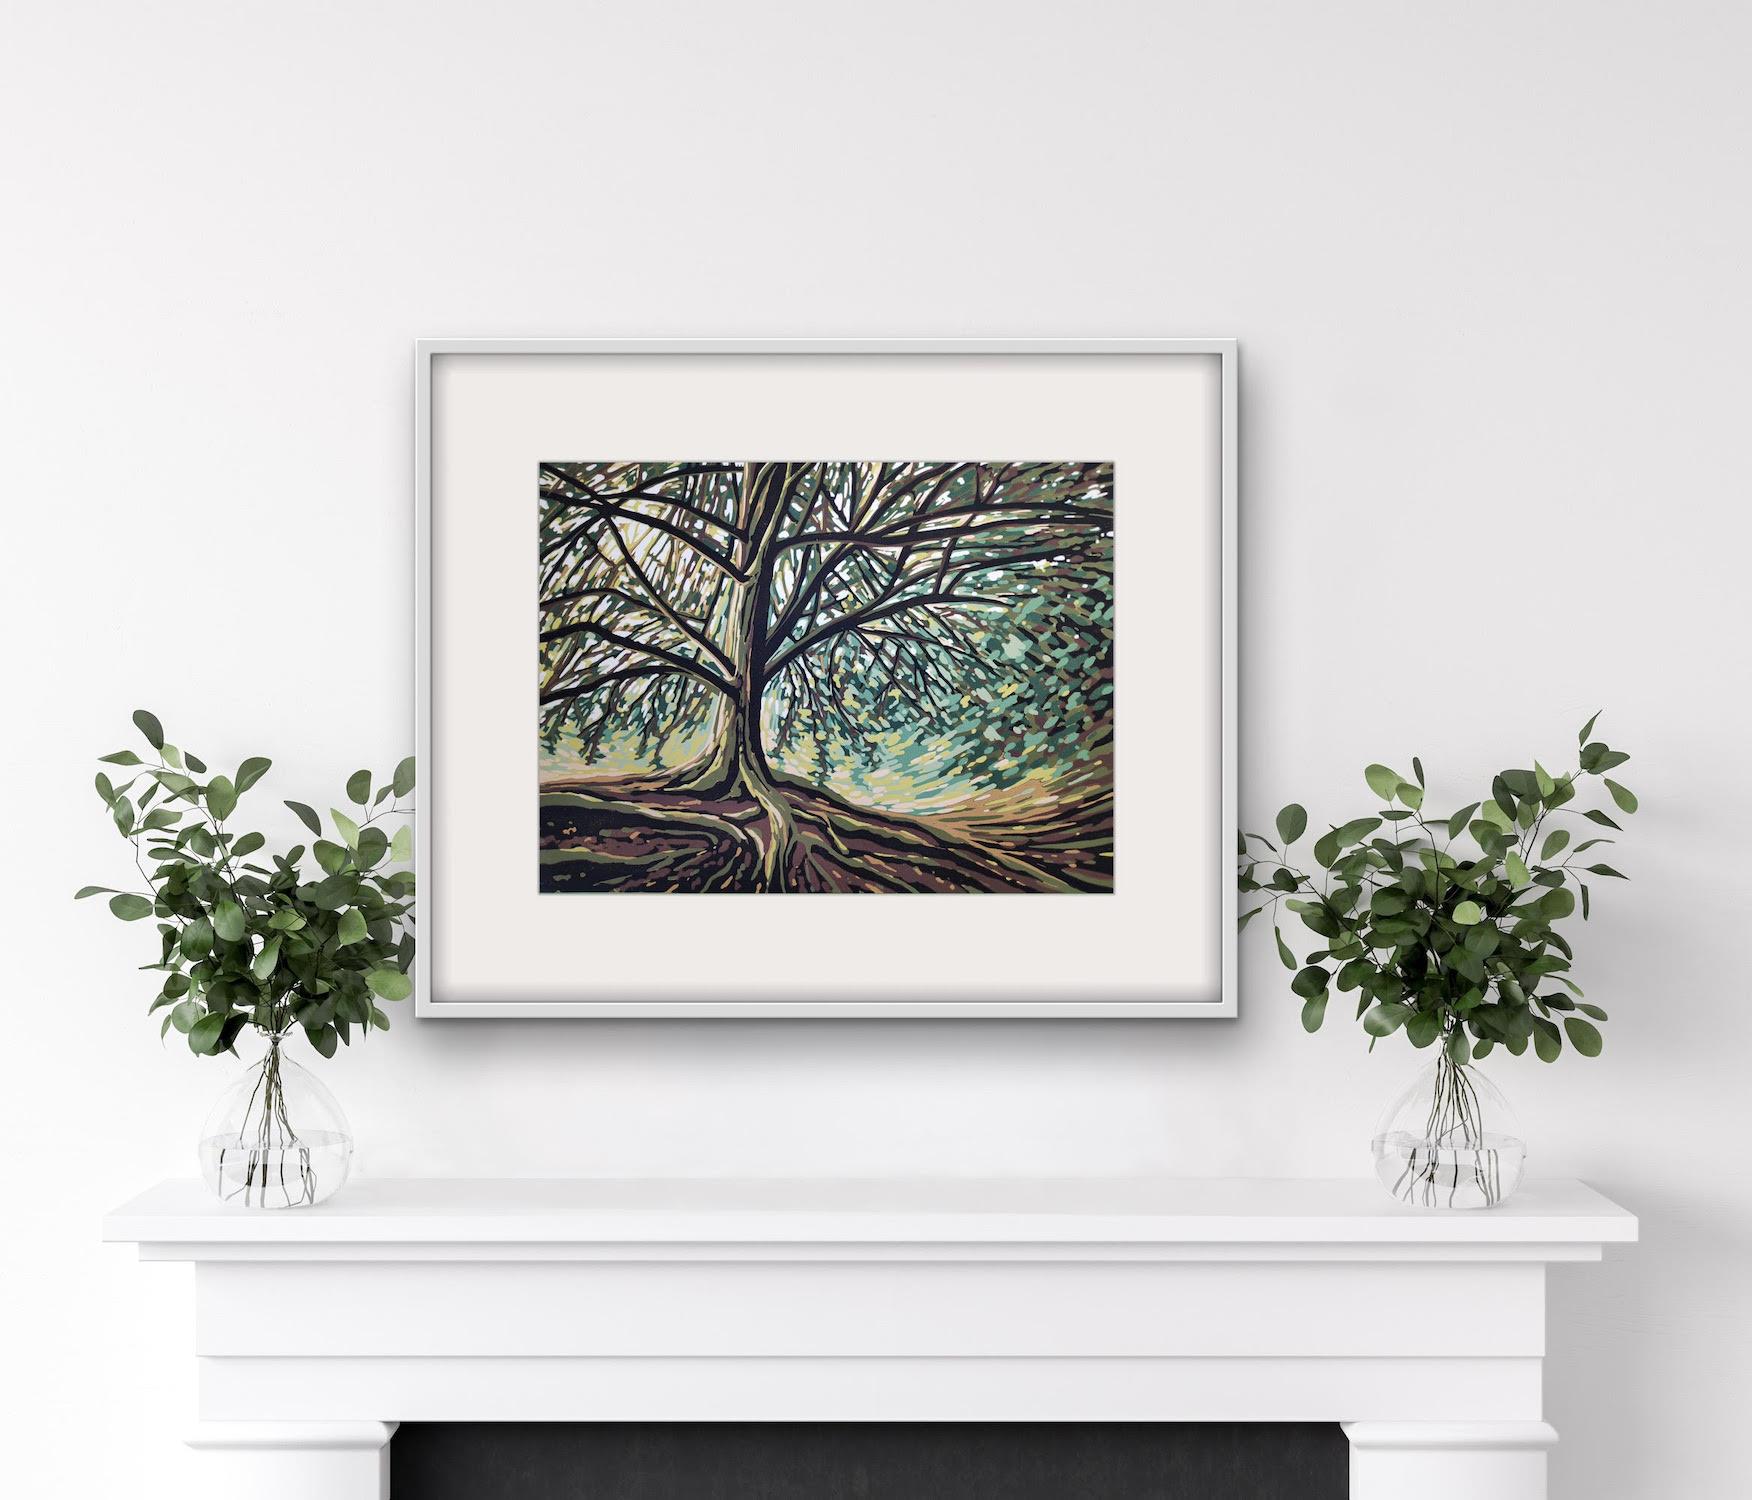 Evergreen, Alexandra Buckle, Limited edition print, Landscape art for sale - Print by Alexandra Buckle 